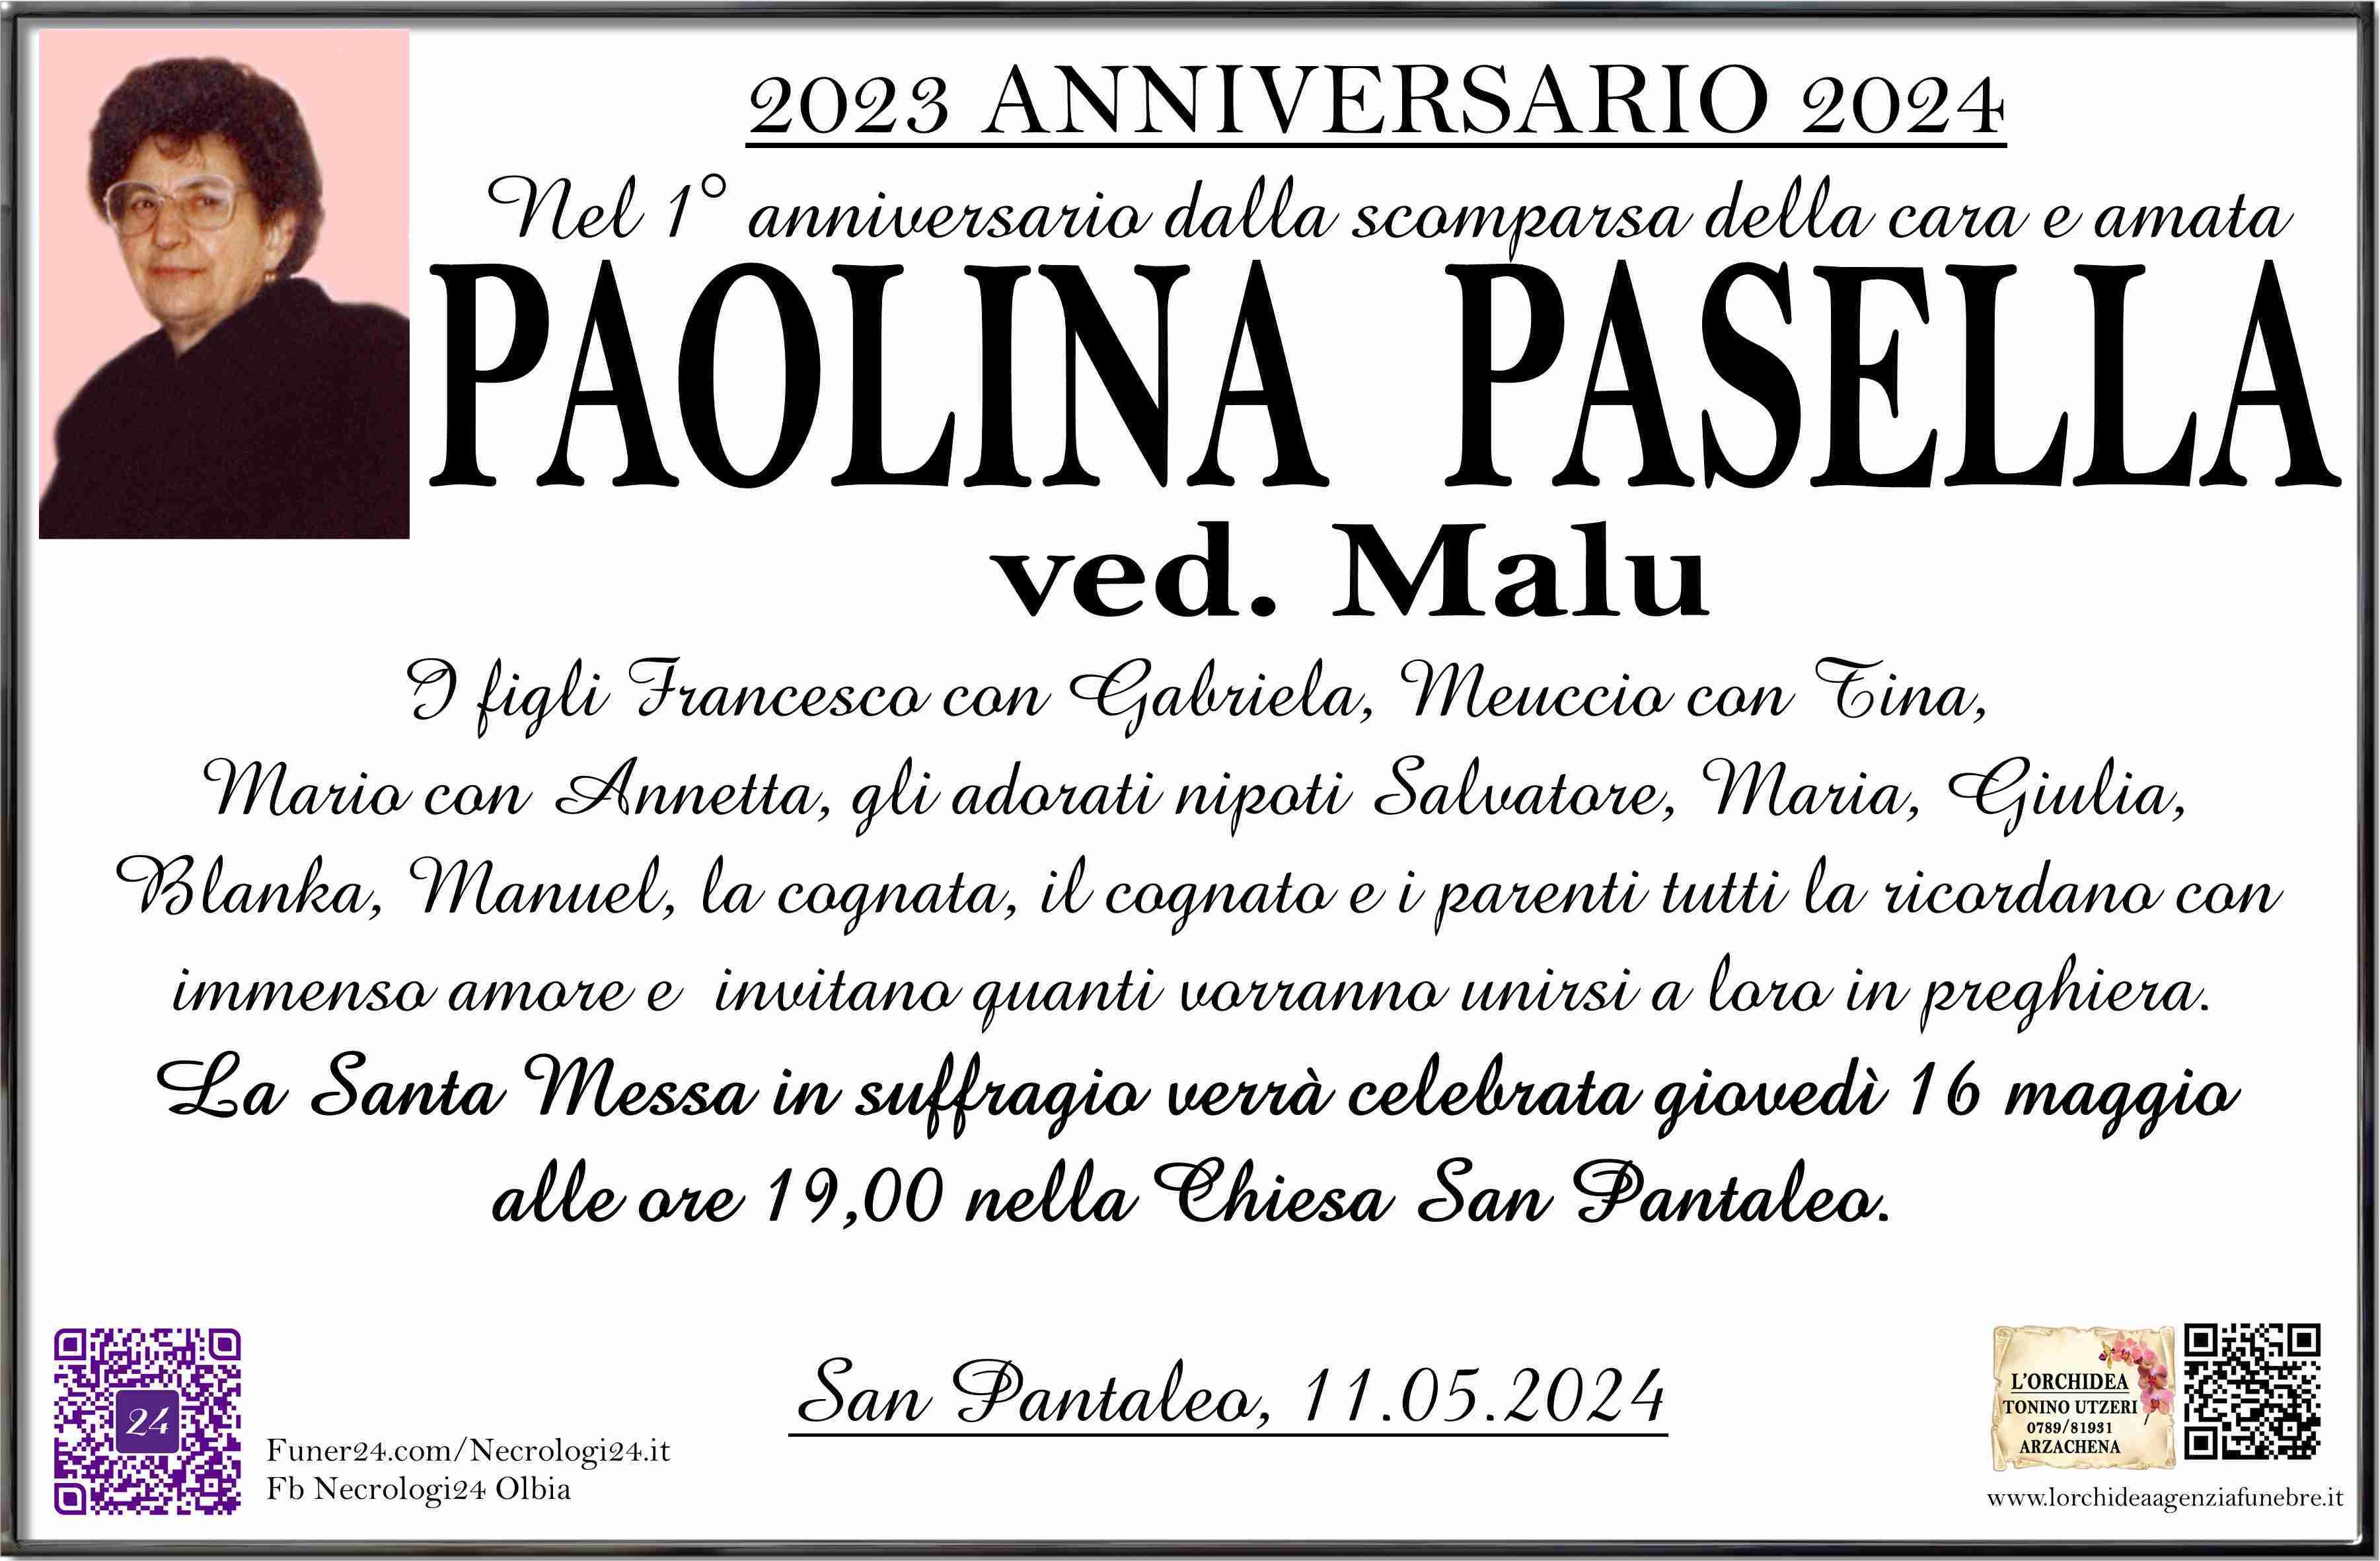 Paolina Pasella